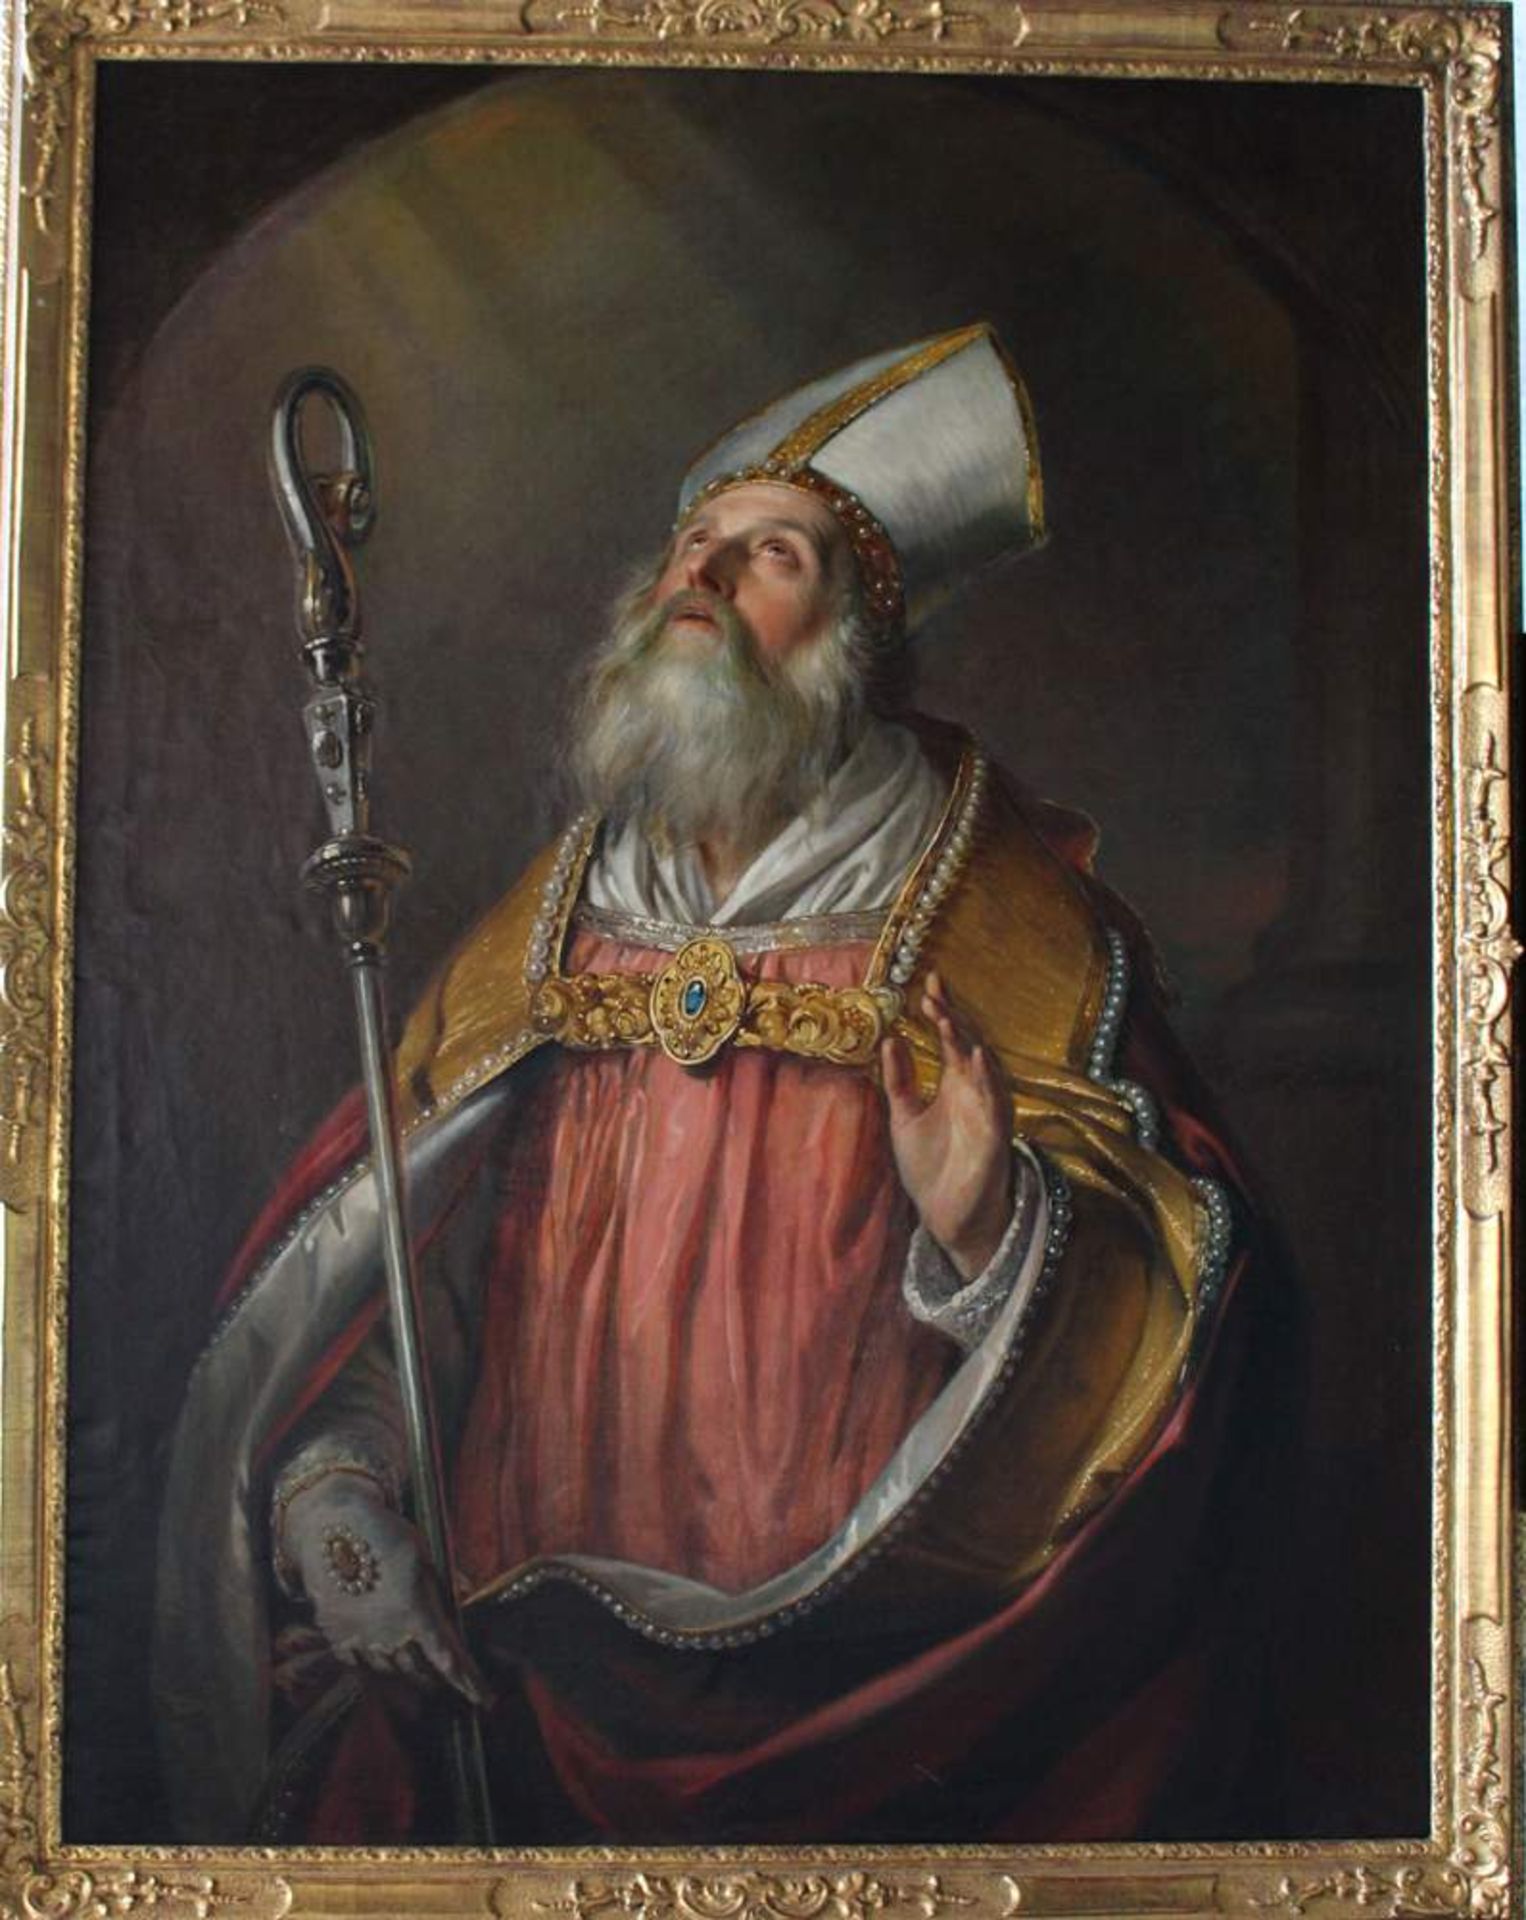 Pieter Fransz de Grebber (c.1600–1652/3)-attributed, Portrait of a bishop or saint, oil on canvas;